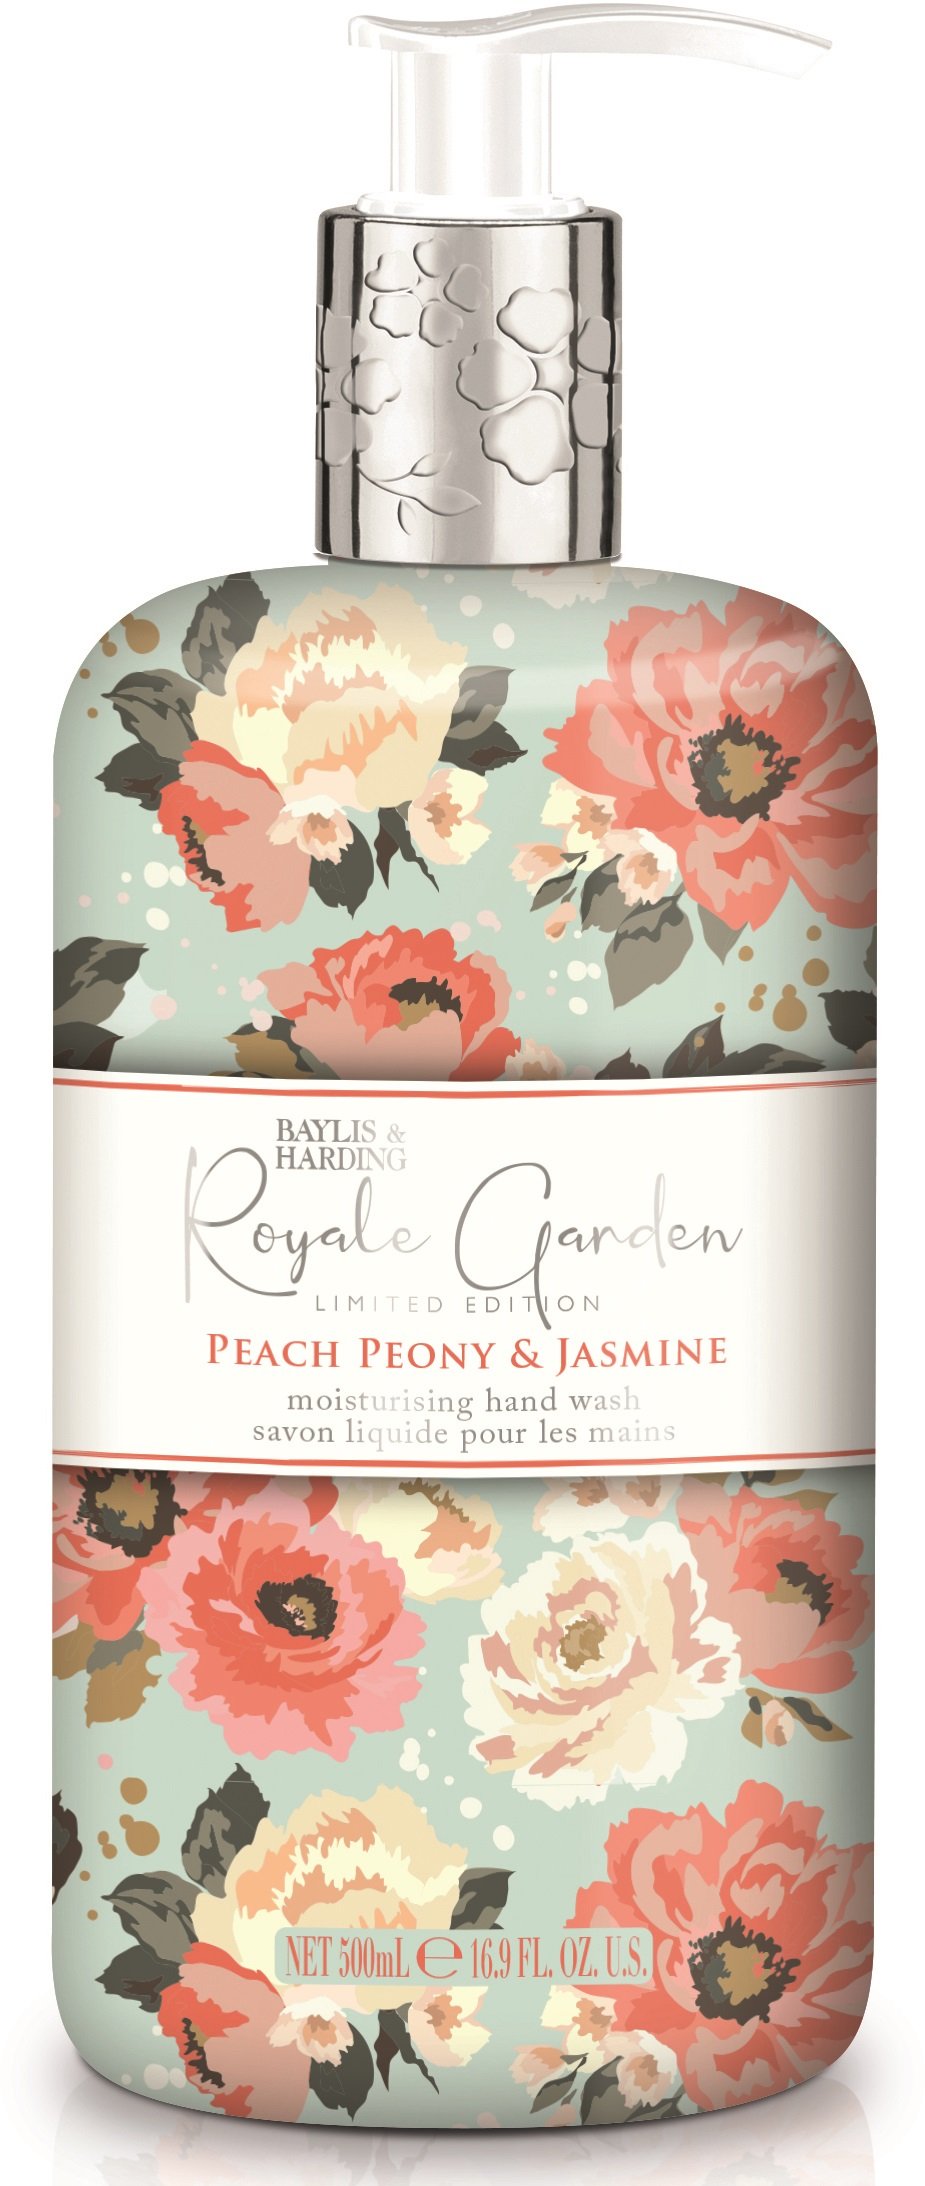 Baylis & Harding Royale Garden Peach Peony & Jasmine Hand Wash 500 ml